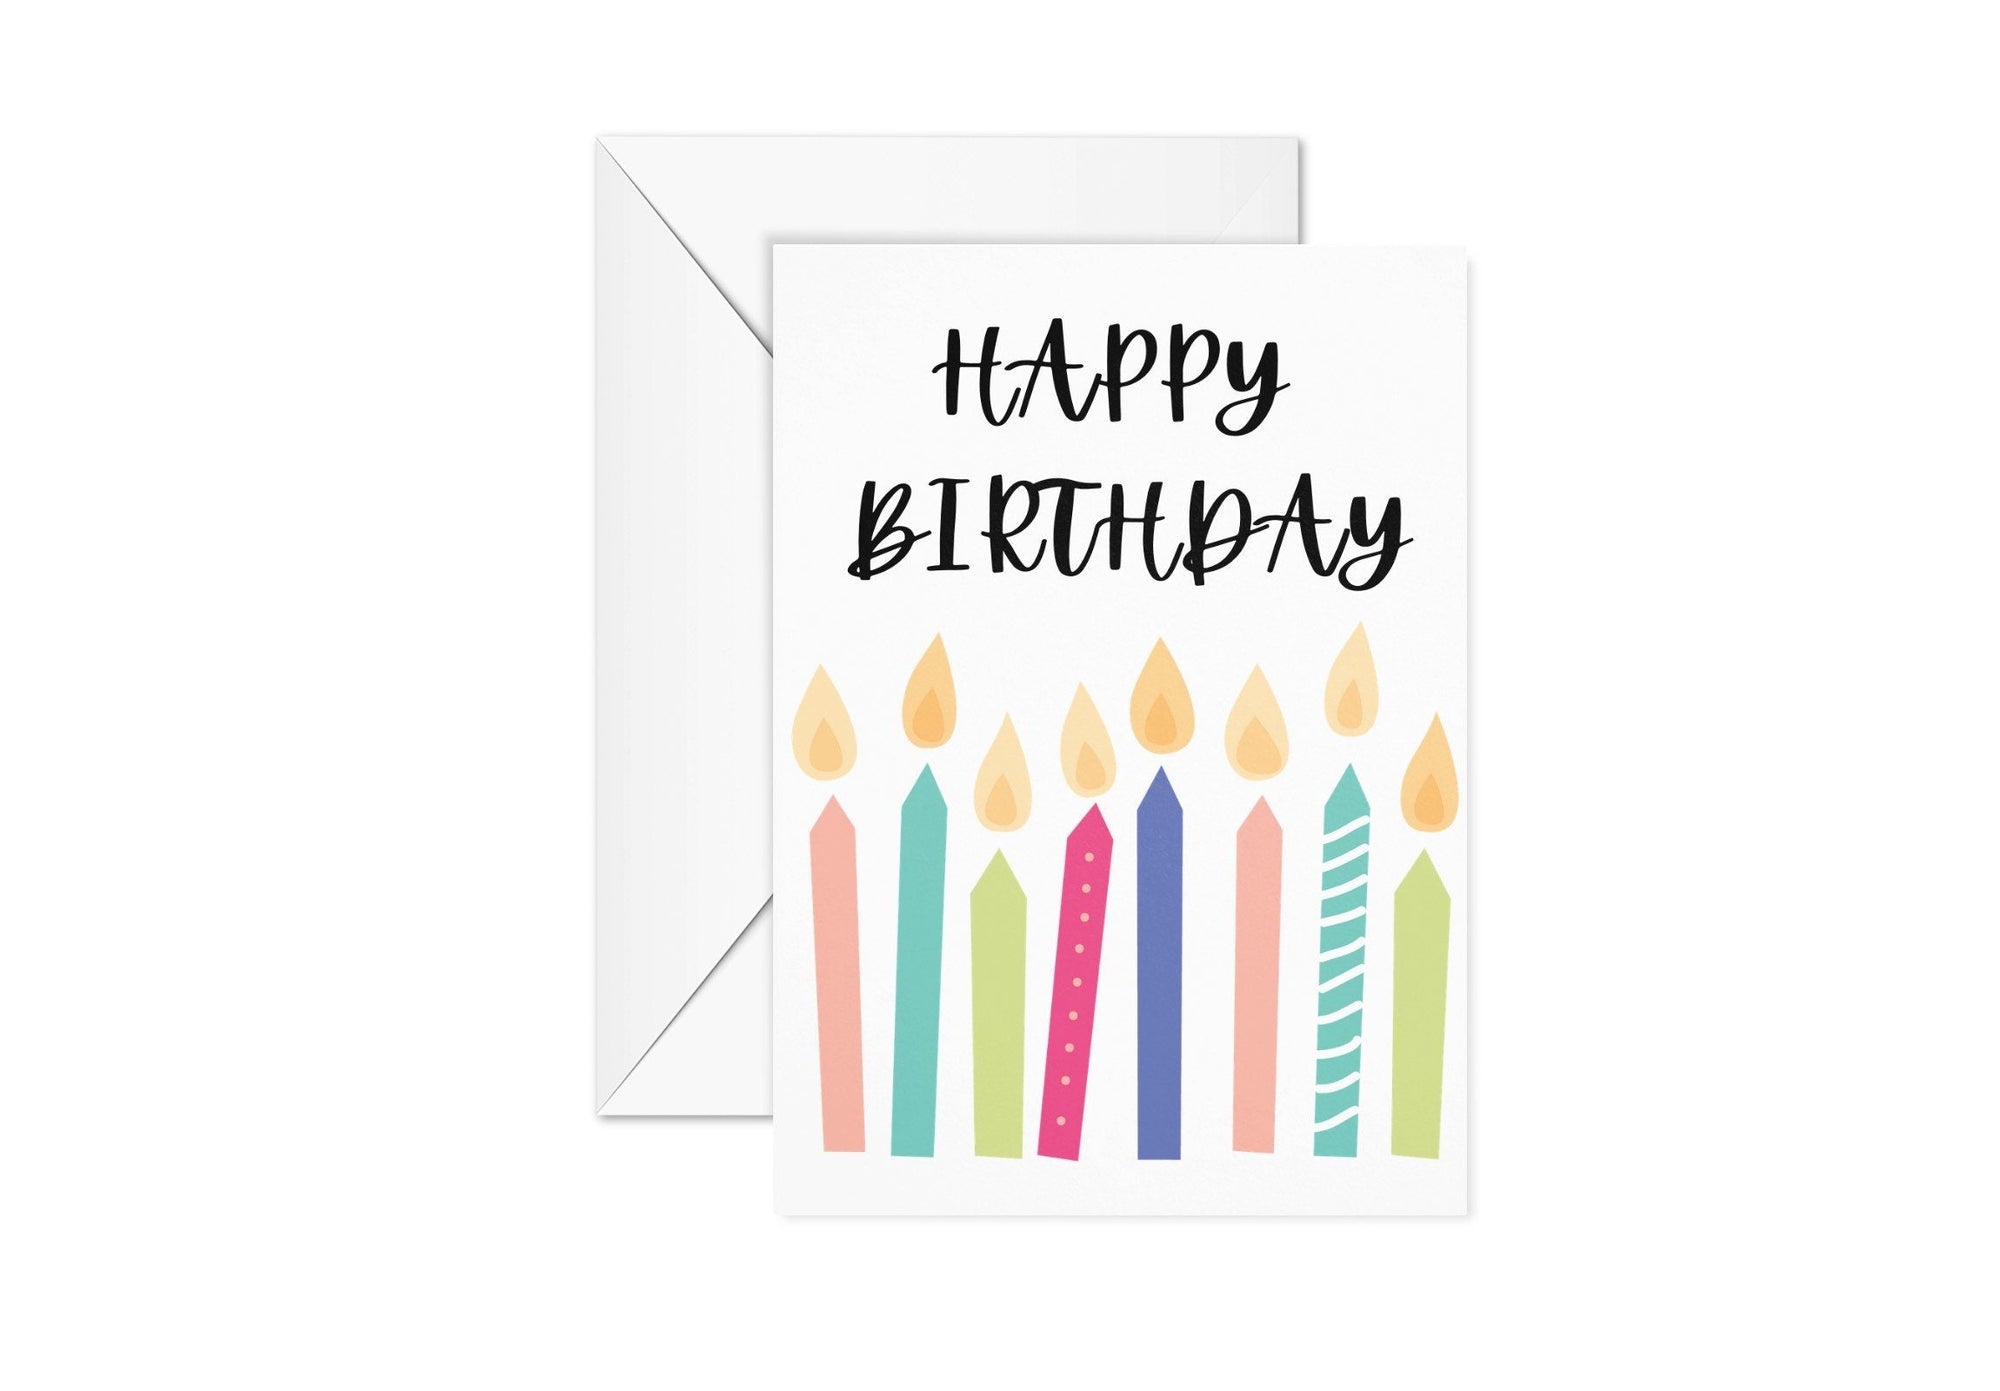 Happy Birthday Greeting Card Violagrace-174 